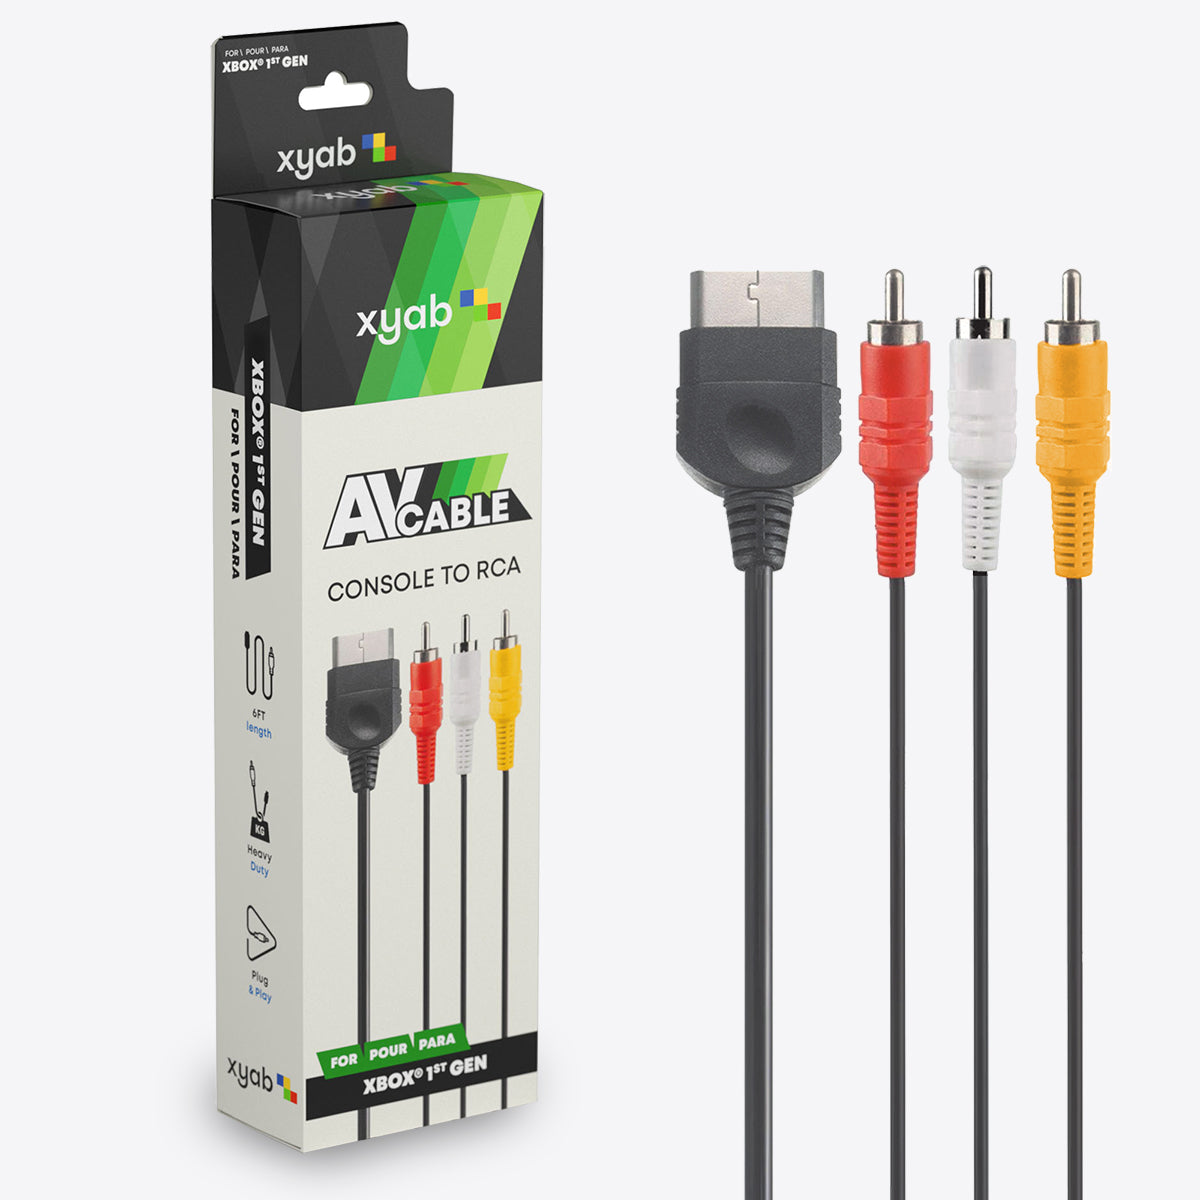 AV Composite Cable
For Microsoft XBOX